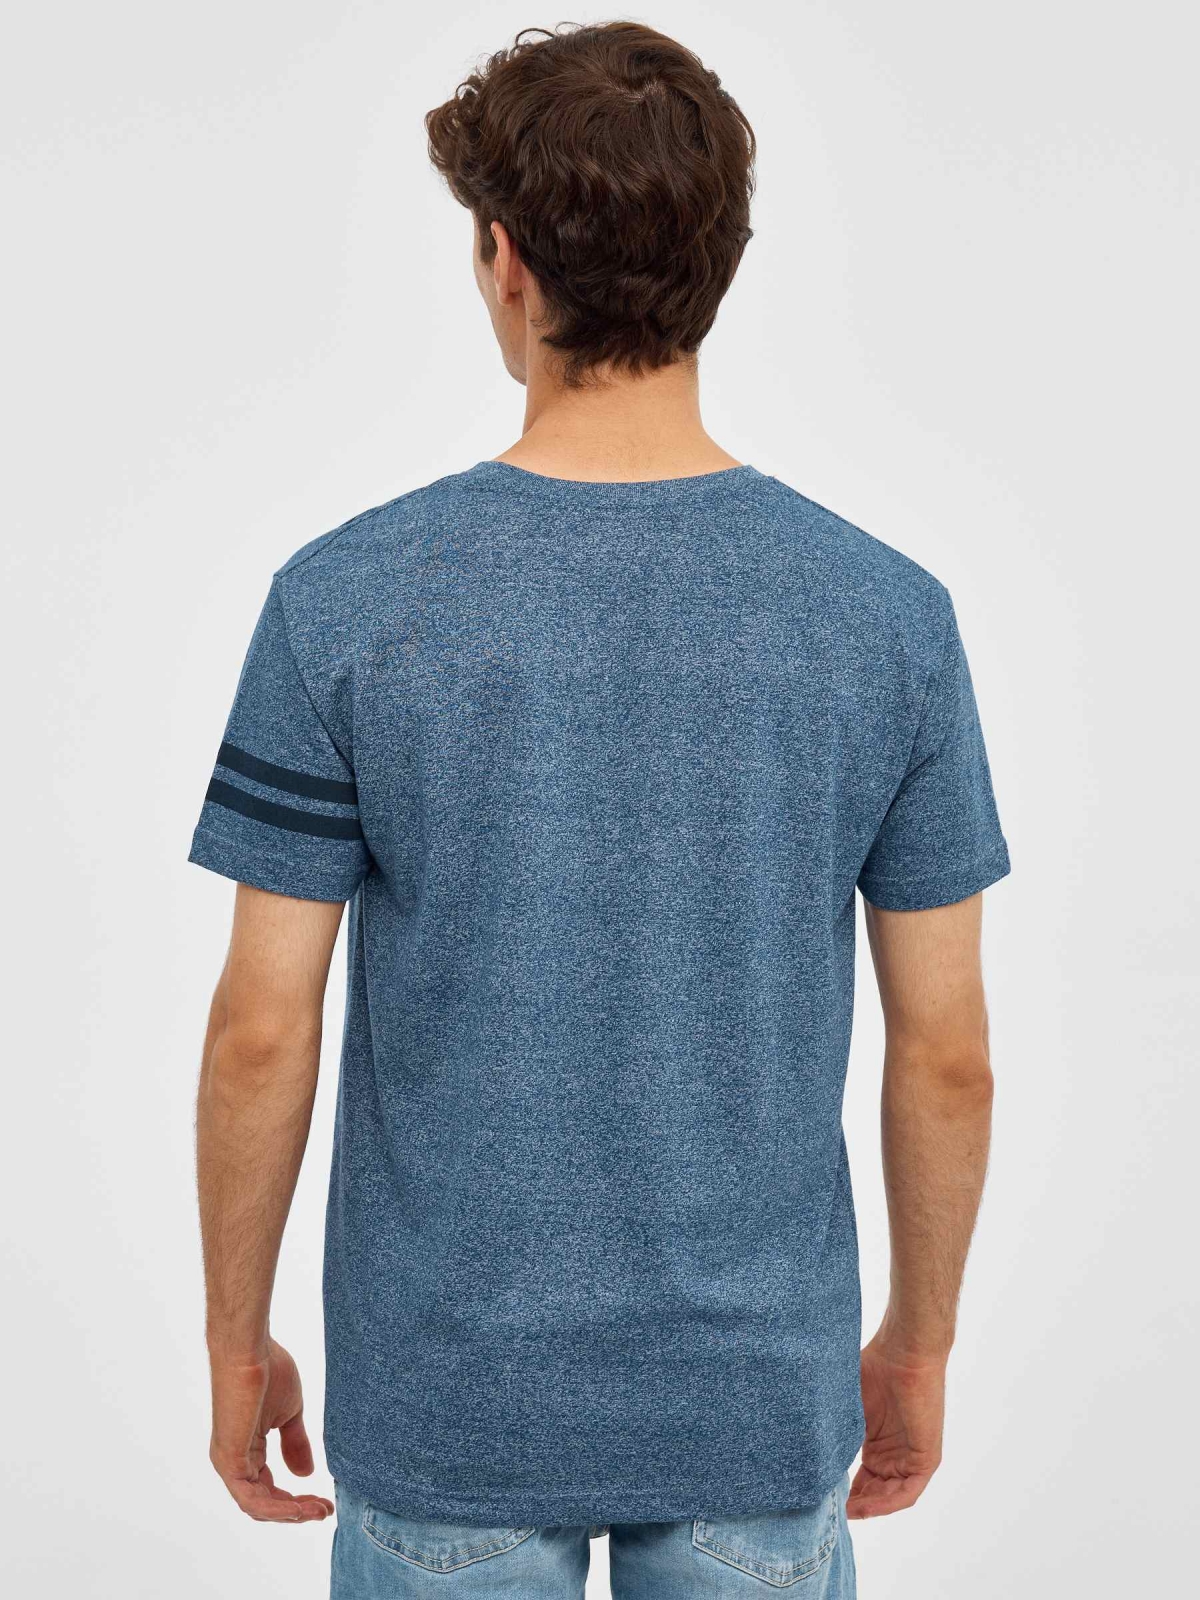 T-shirt Survivor azul vista meia traseira